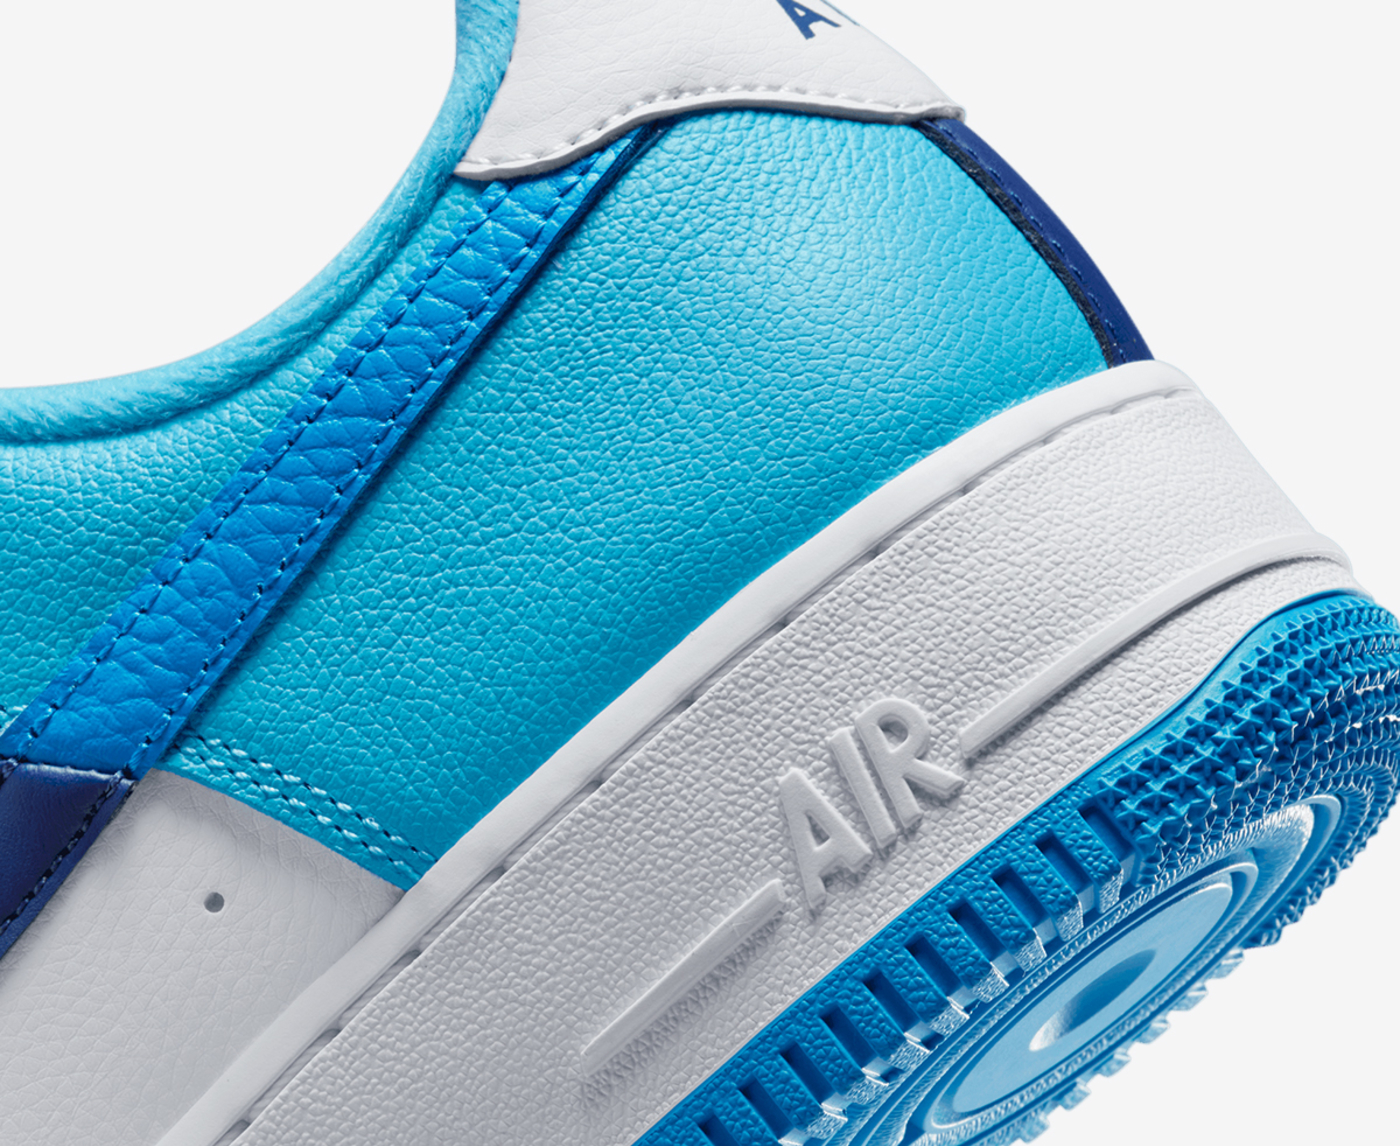 Nike - Buy NIKE AIR FORCE 1 '07 LV8 'WHITE/LIGHT PHOTO BLUE-DEEP ROYAL  BLUE' - VegNonVeg